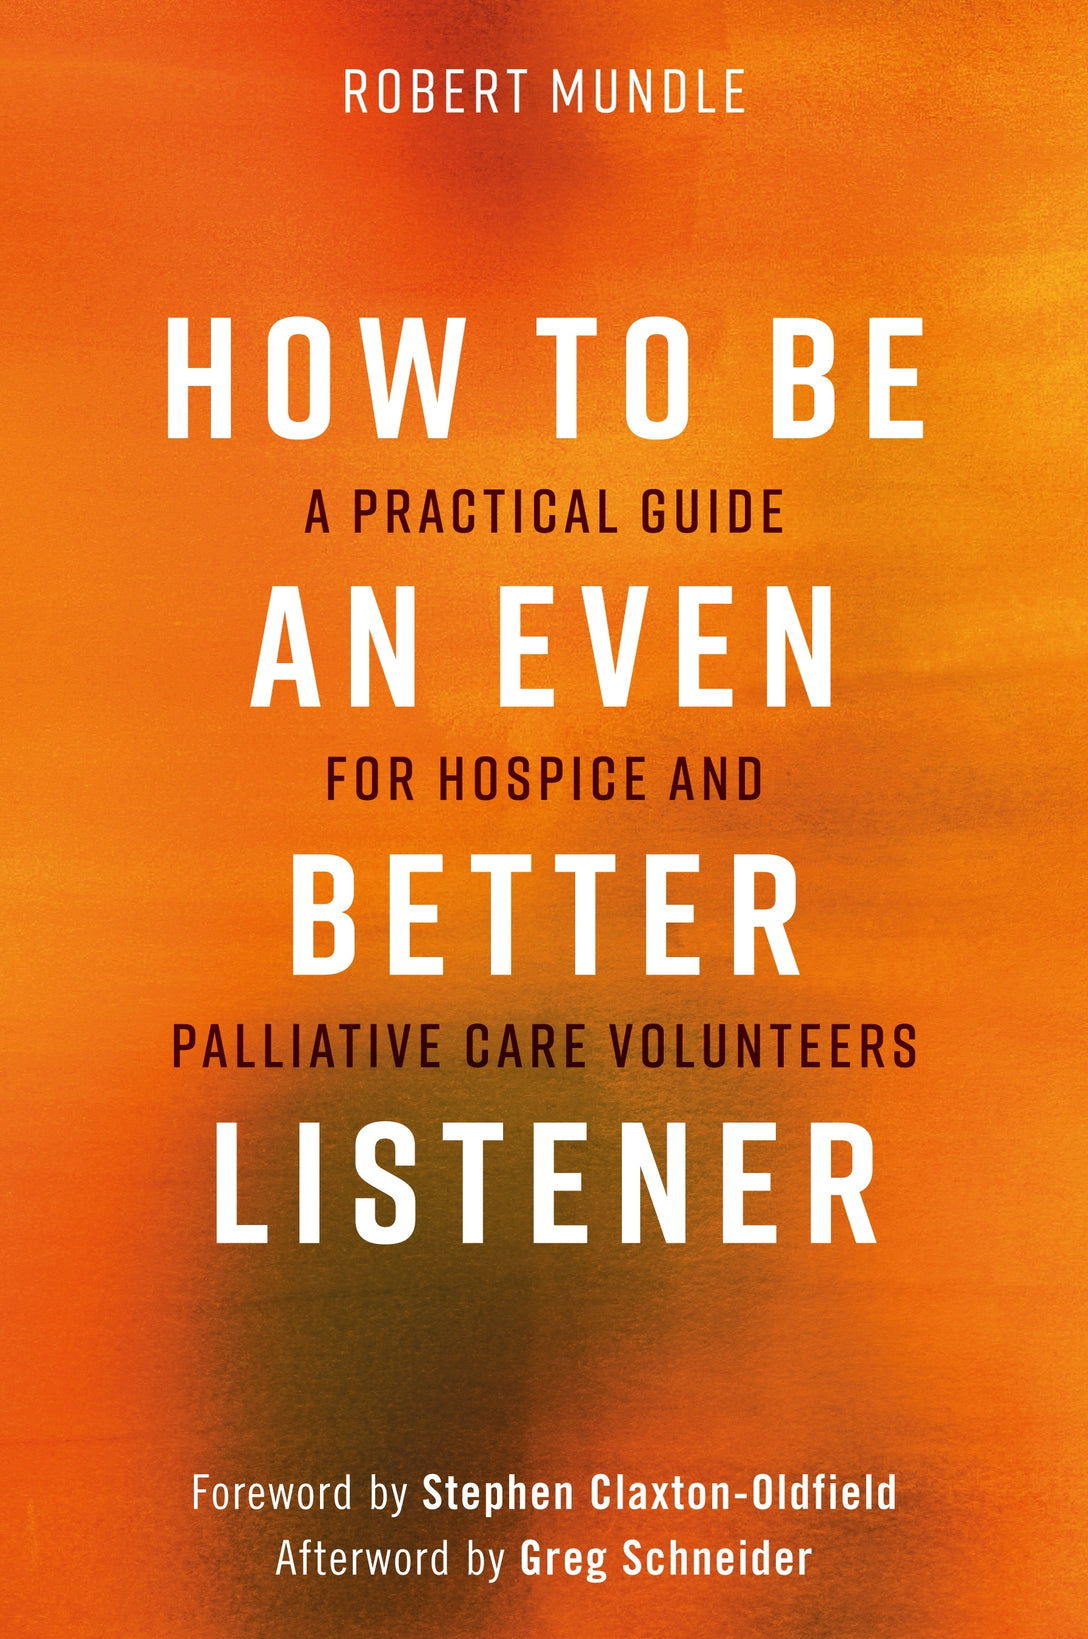 How to Be an Even Better Listener by Robert Mundle, Stephen Claxton-Oldfield, Greg Schneider